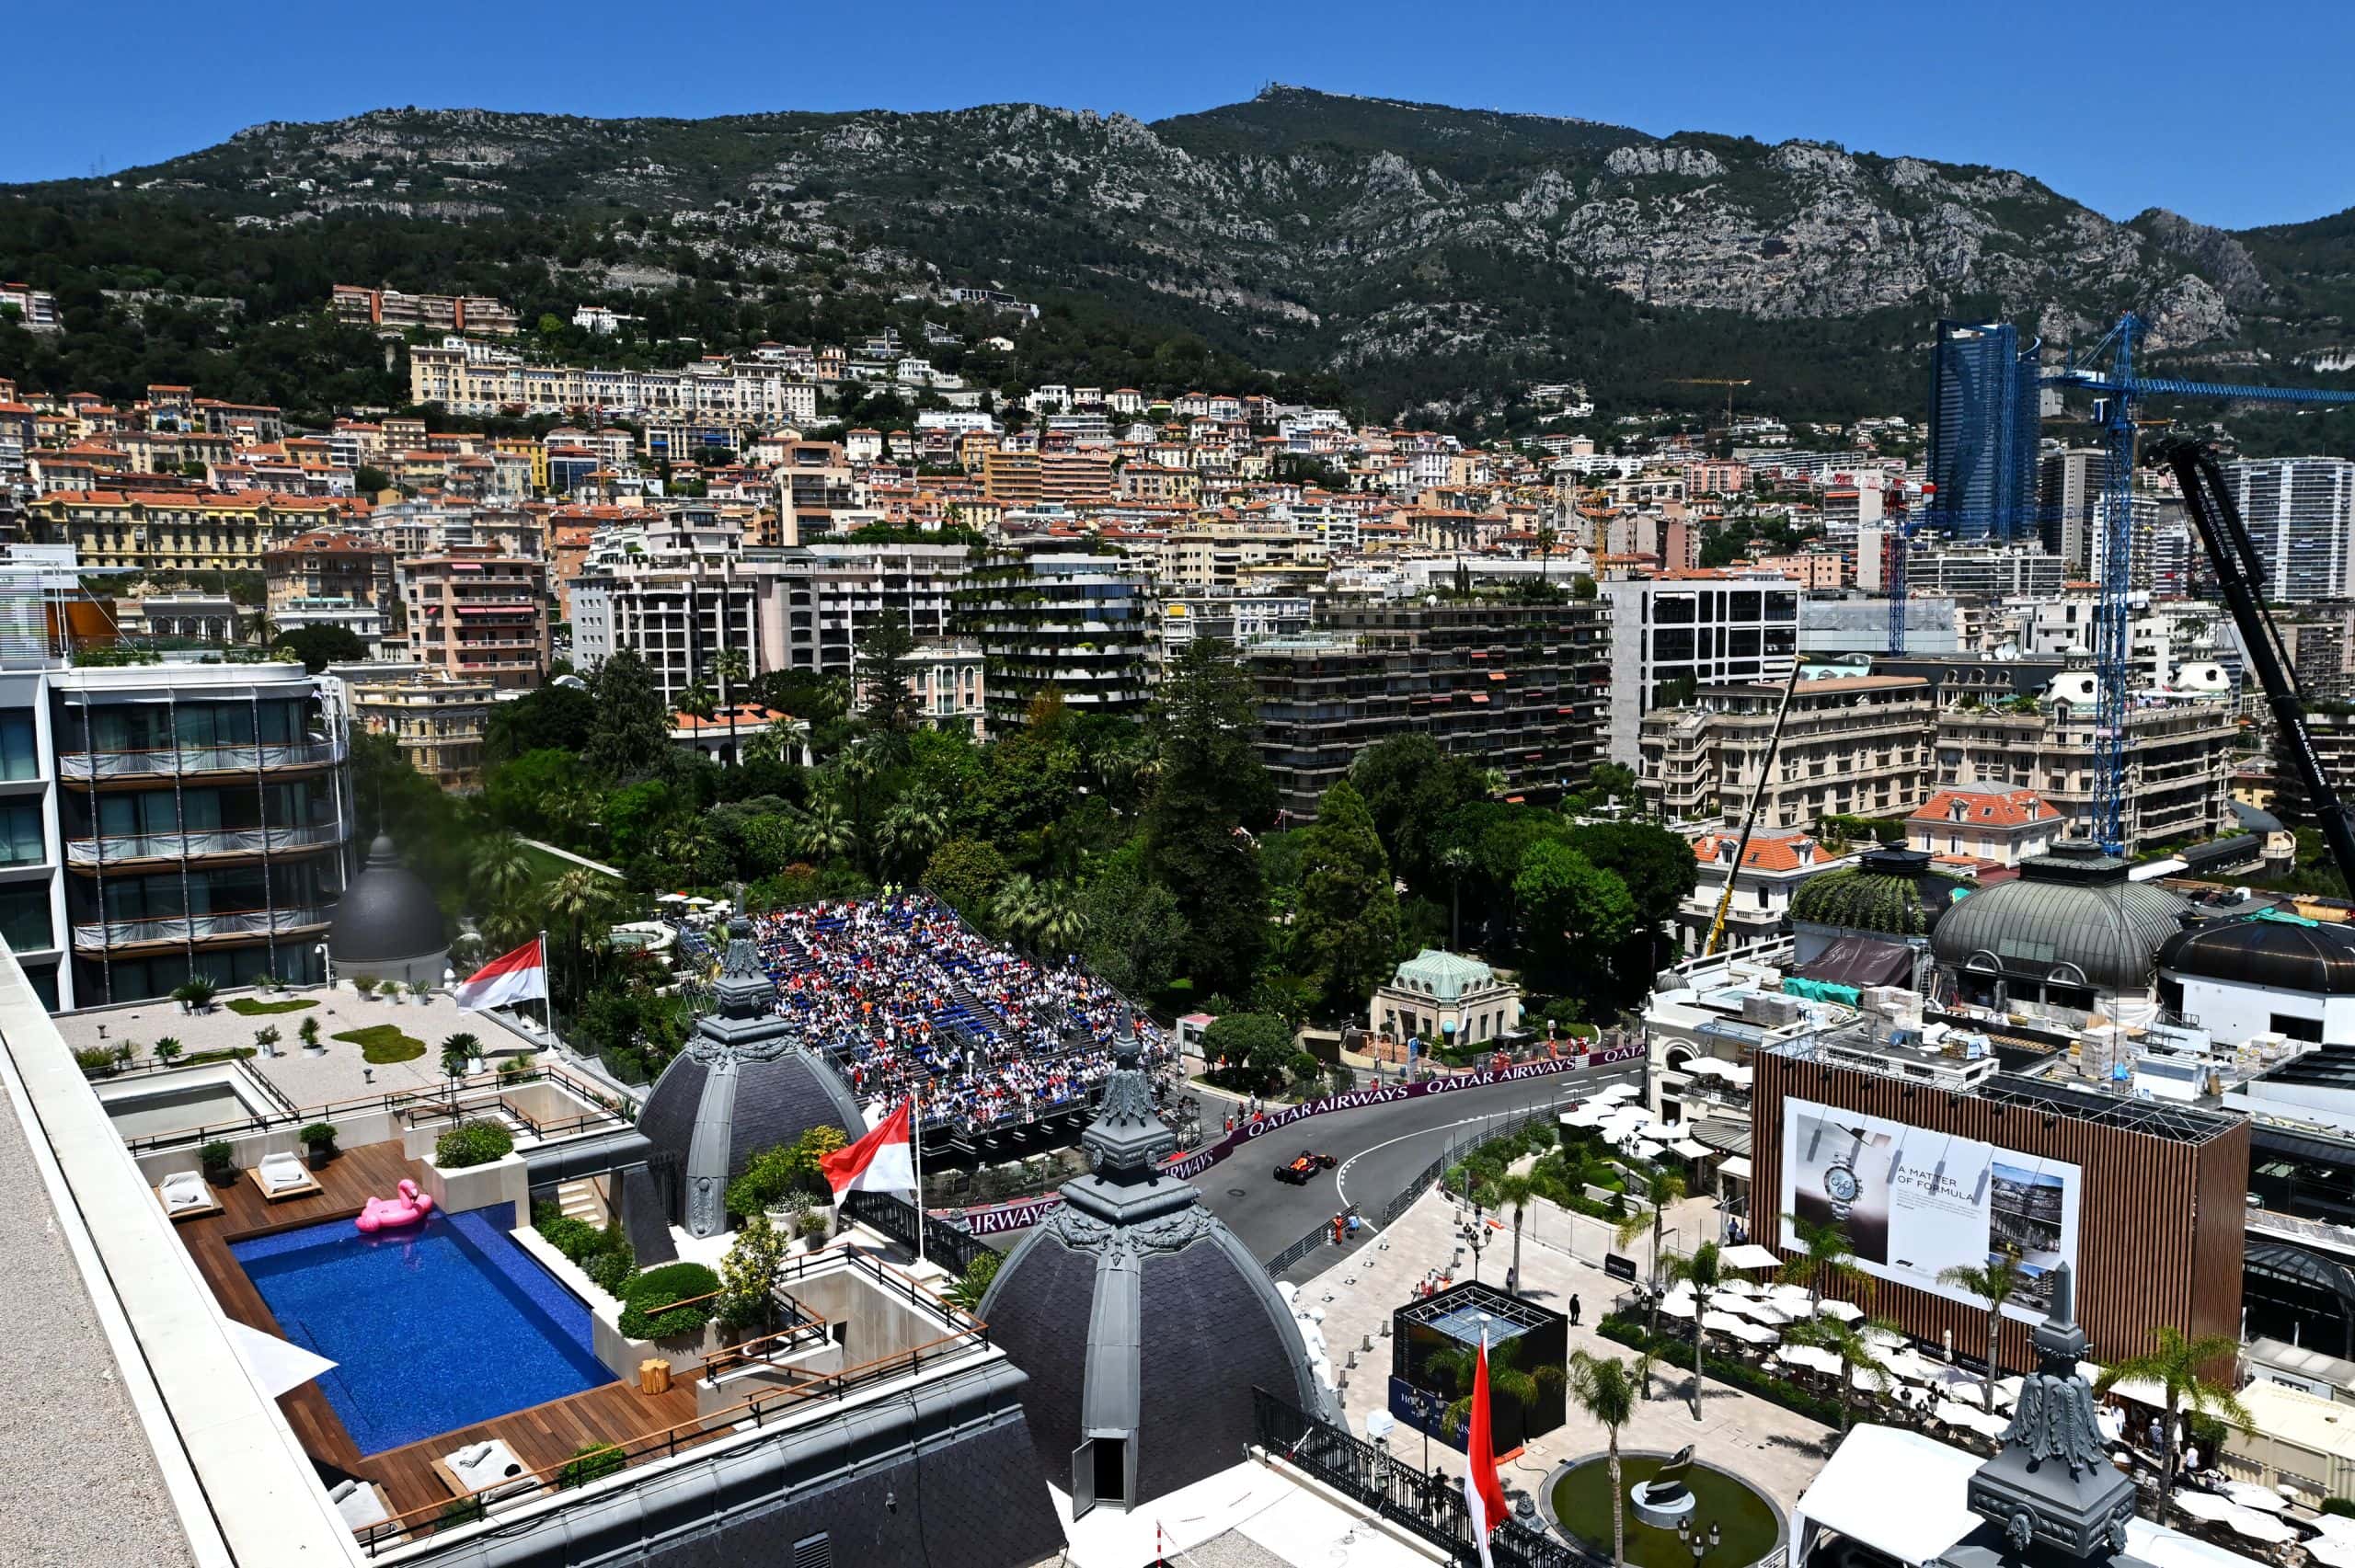 F1 Grand Prix Of Monaco Final Practice